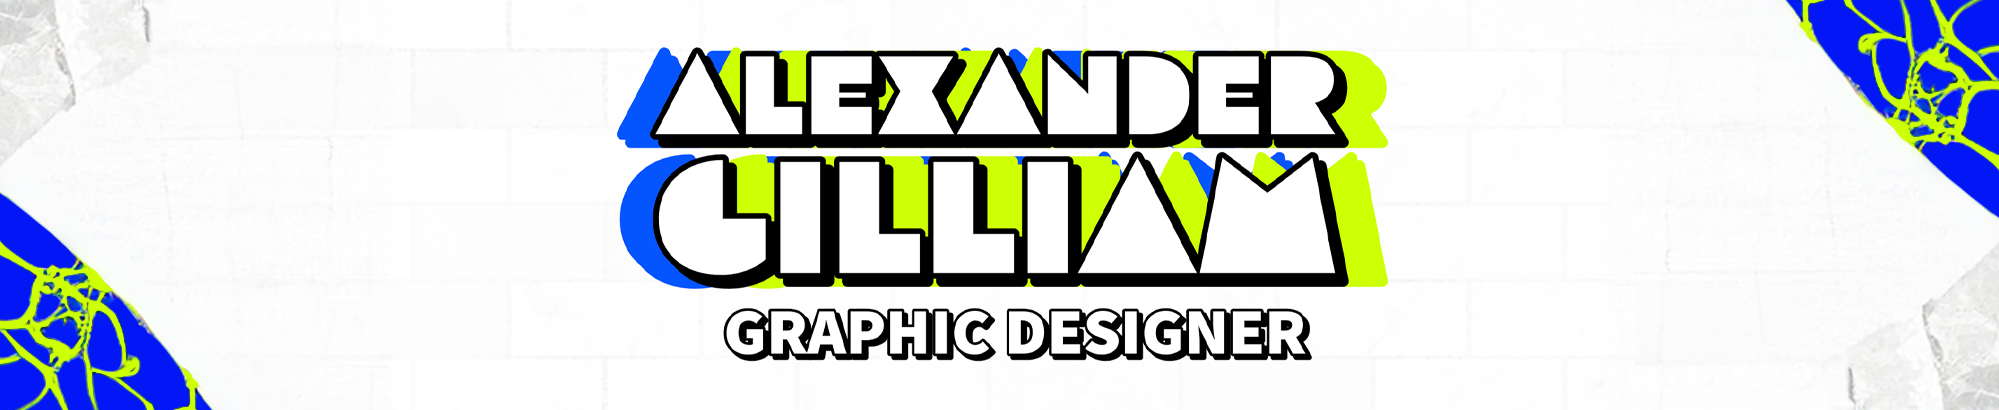 Banner de perfil de Alexander Gilliam